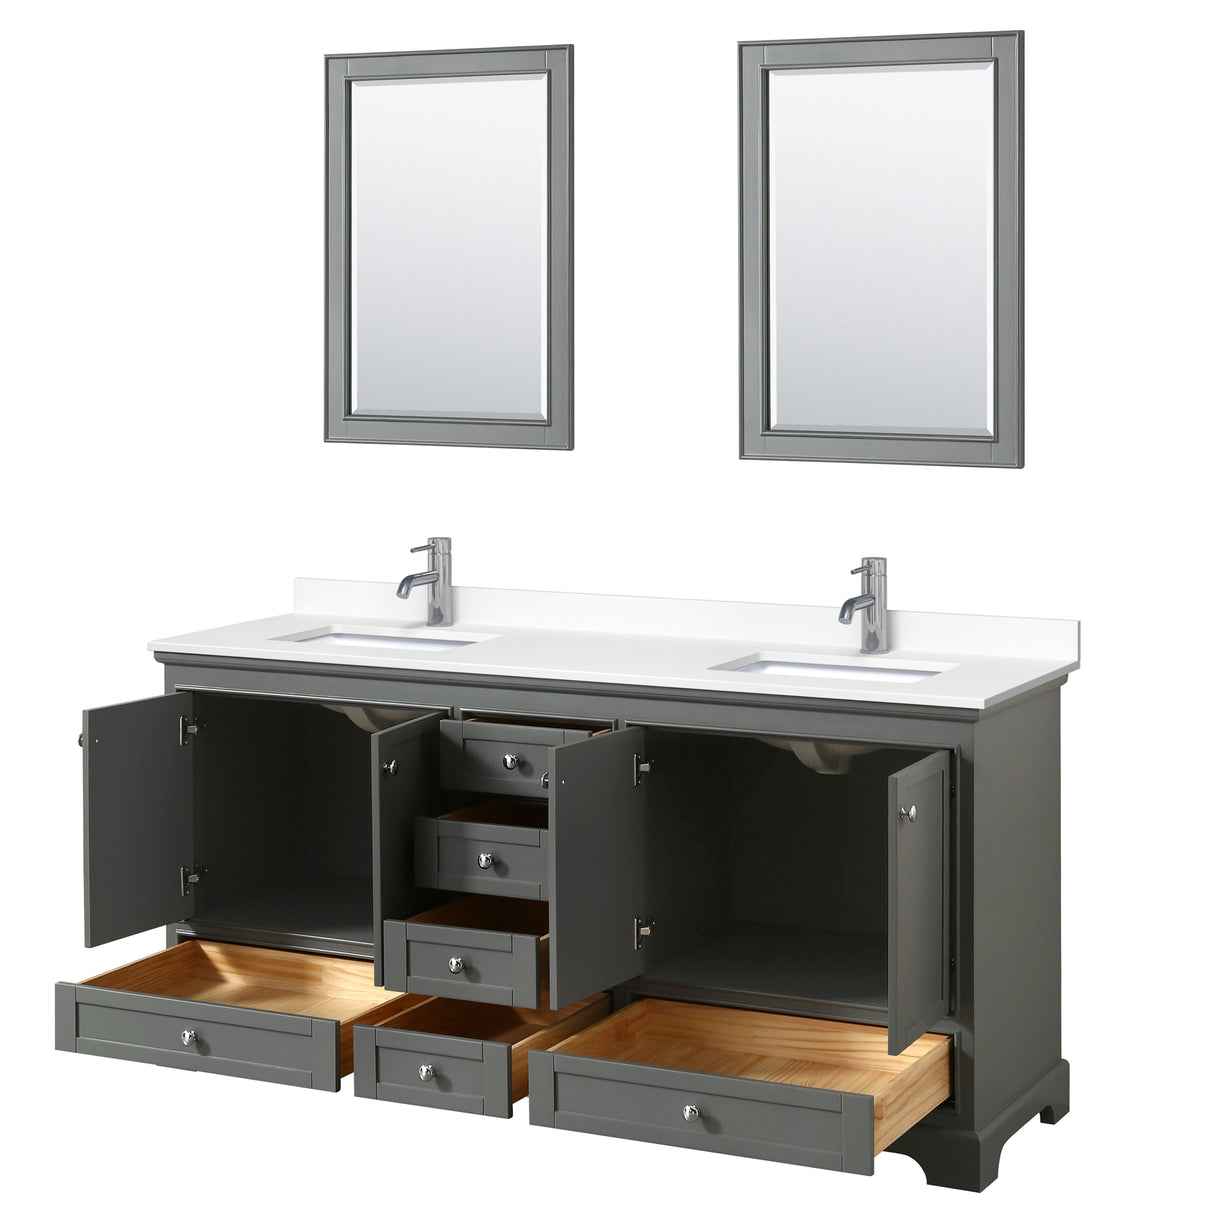 Deborah 72 Inch Double Bathroom Vanity in Dark Gray White Cultured Marble Countertop Undermount Square Sinks 24 Inch Mirrors